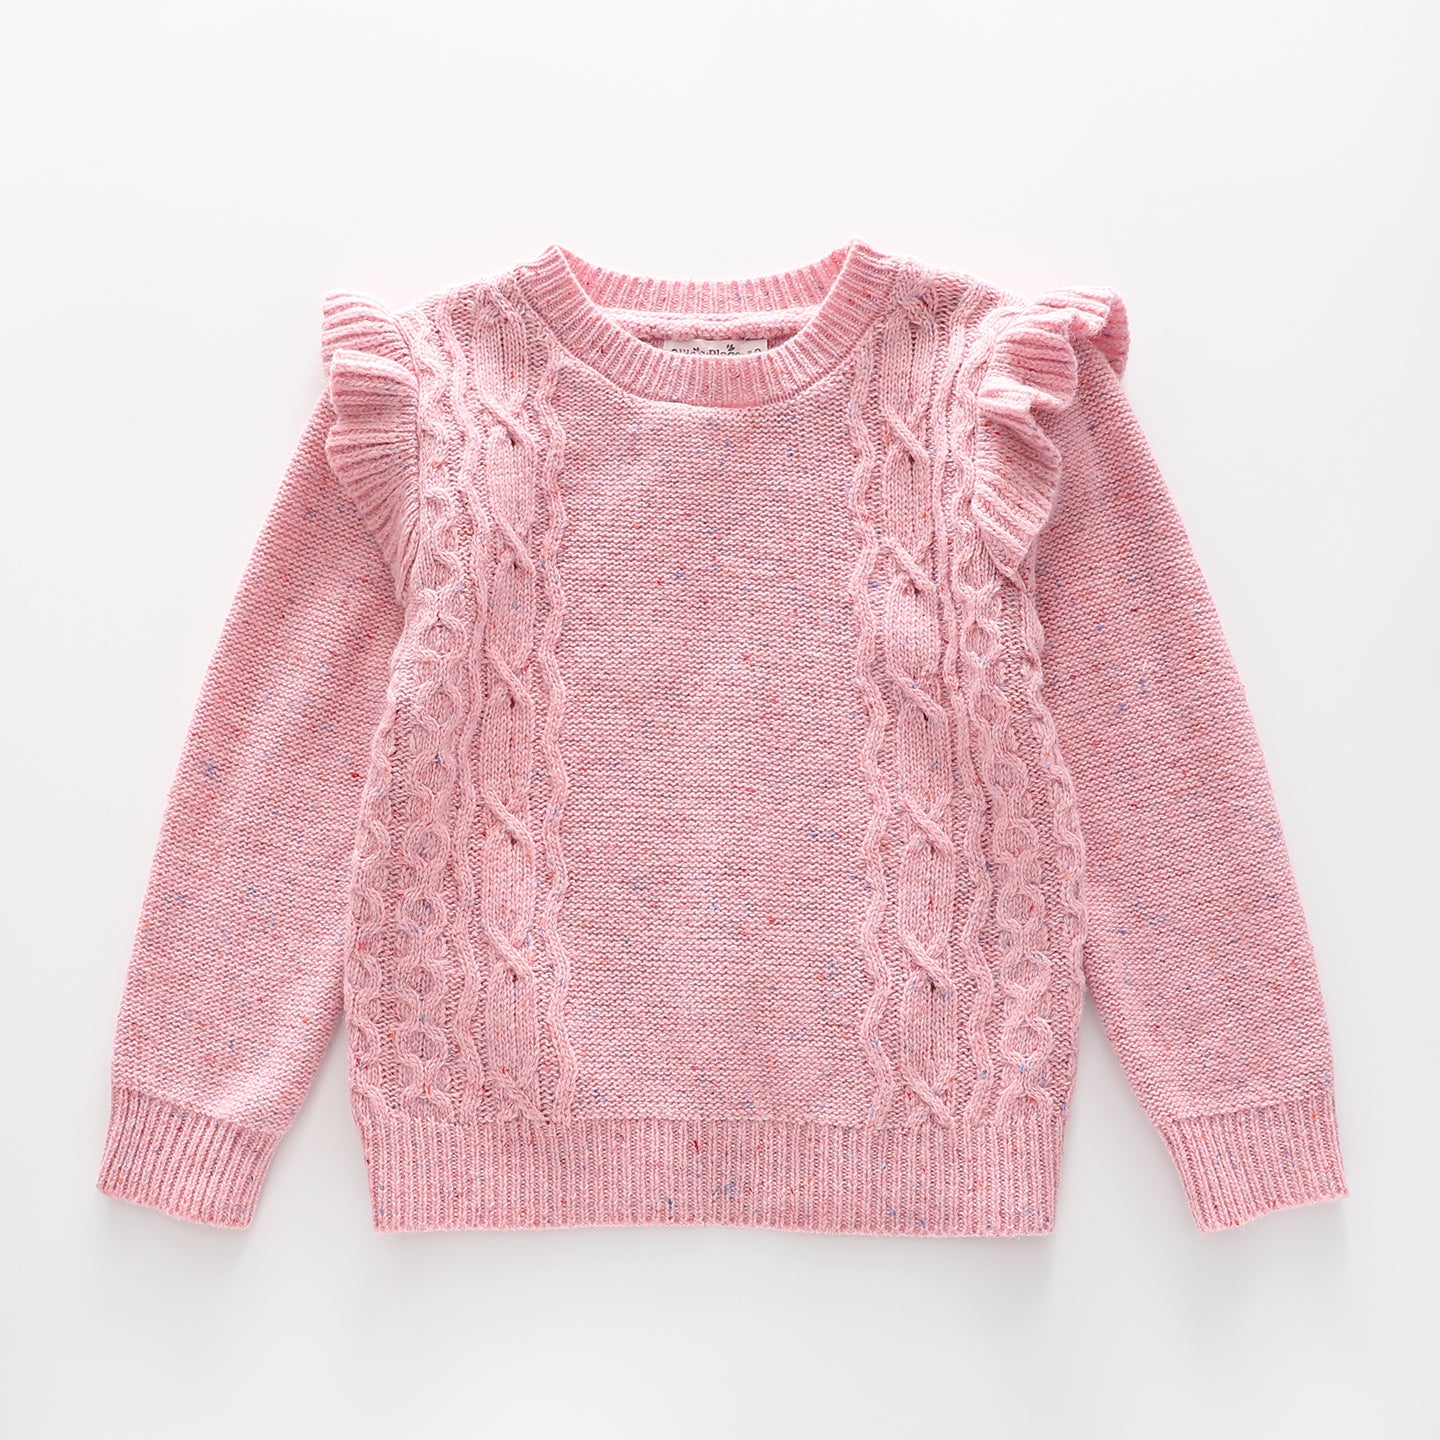 Girls' True Knit Pink Sweater